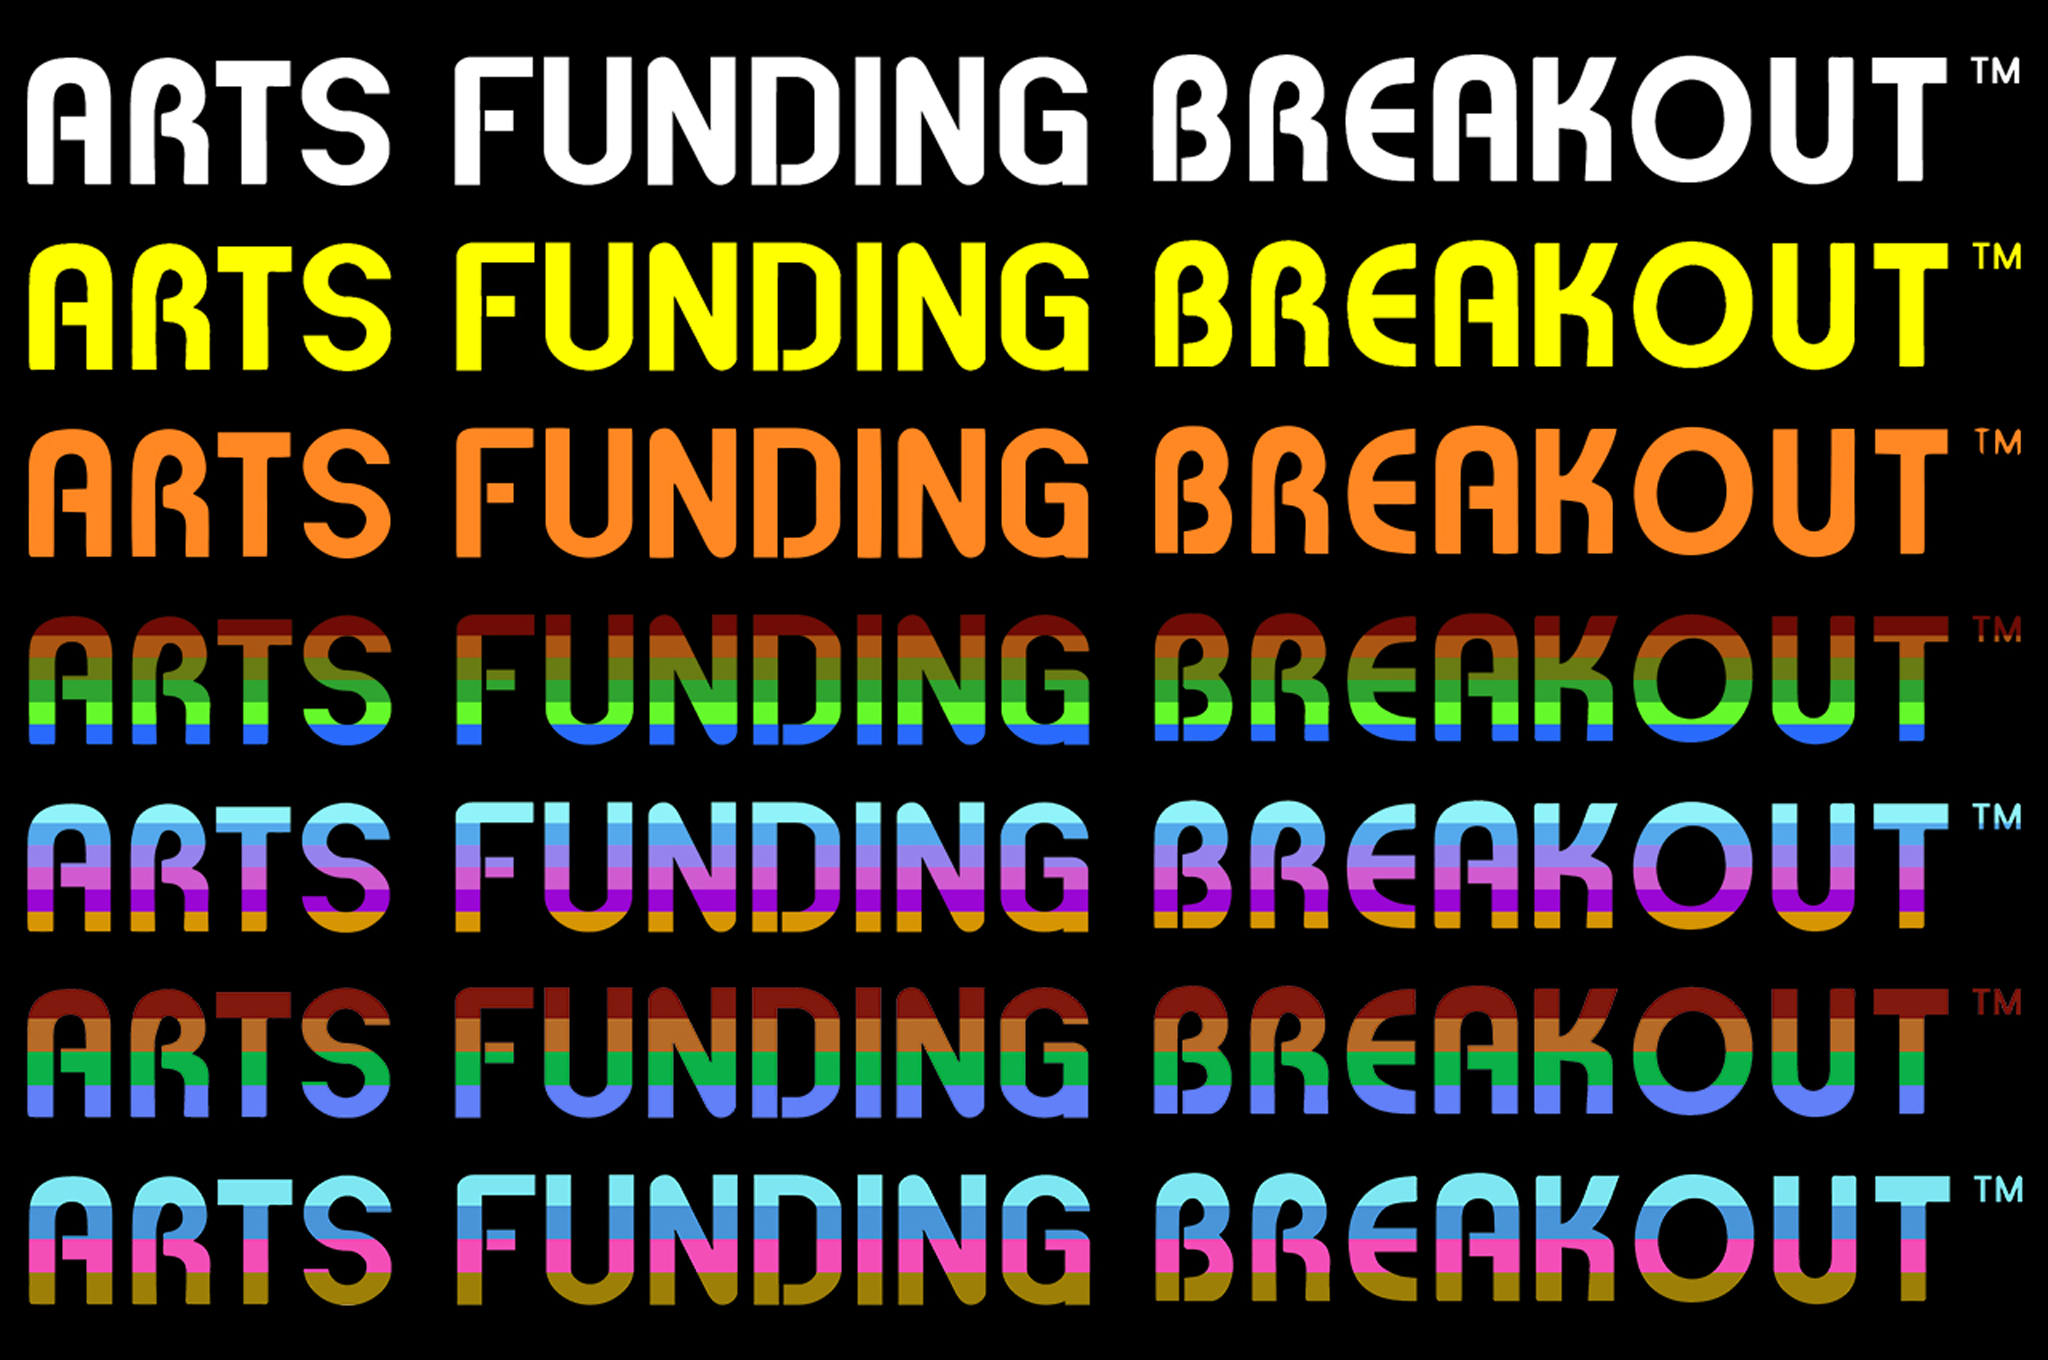 Arts funding breakout logo variants